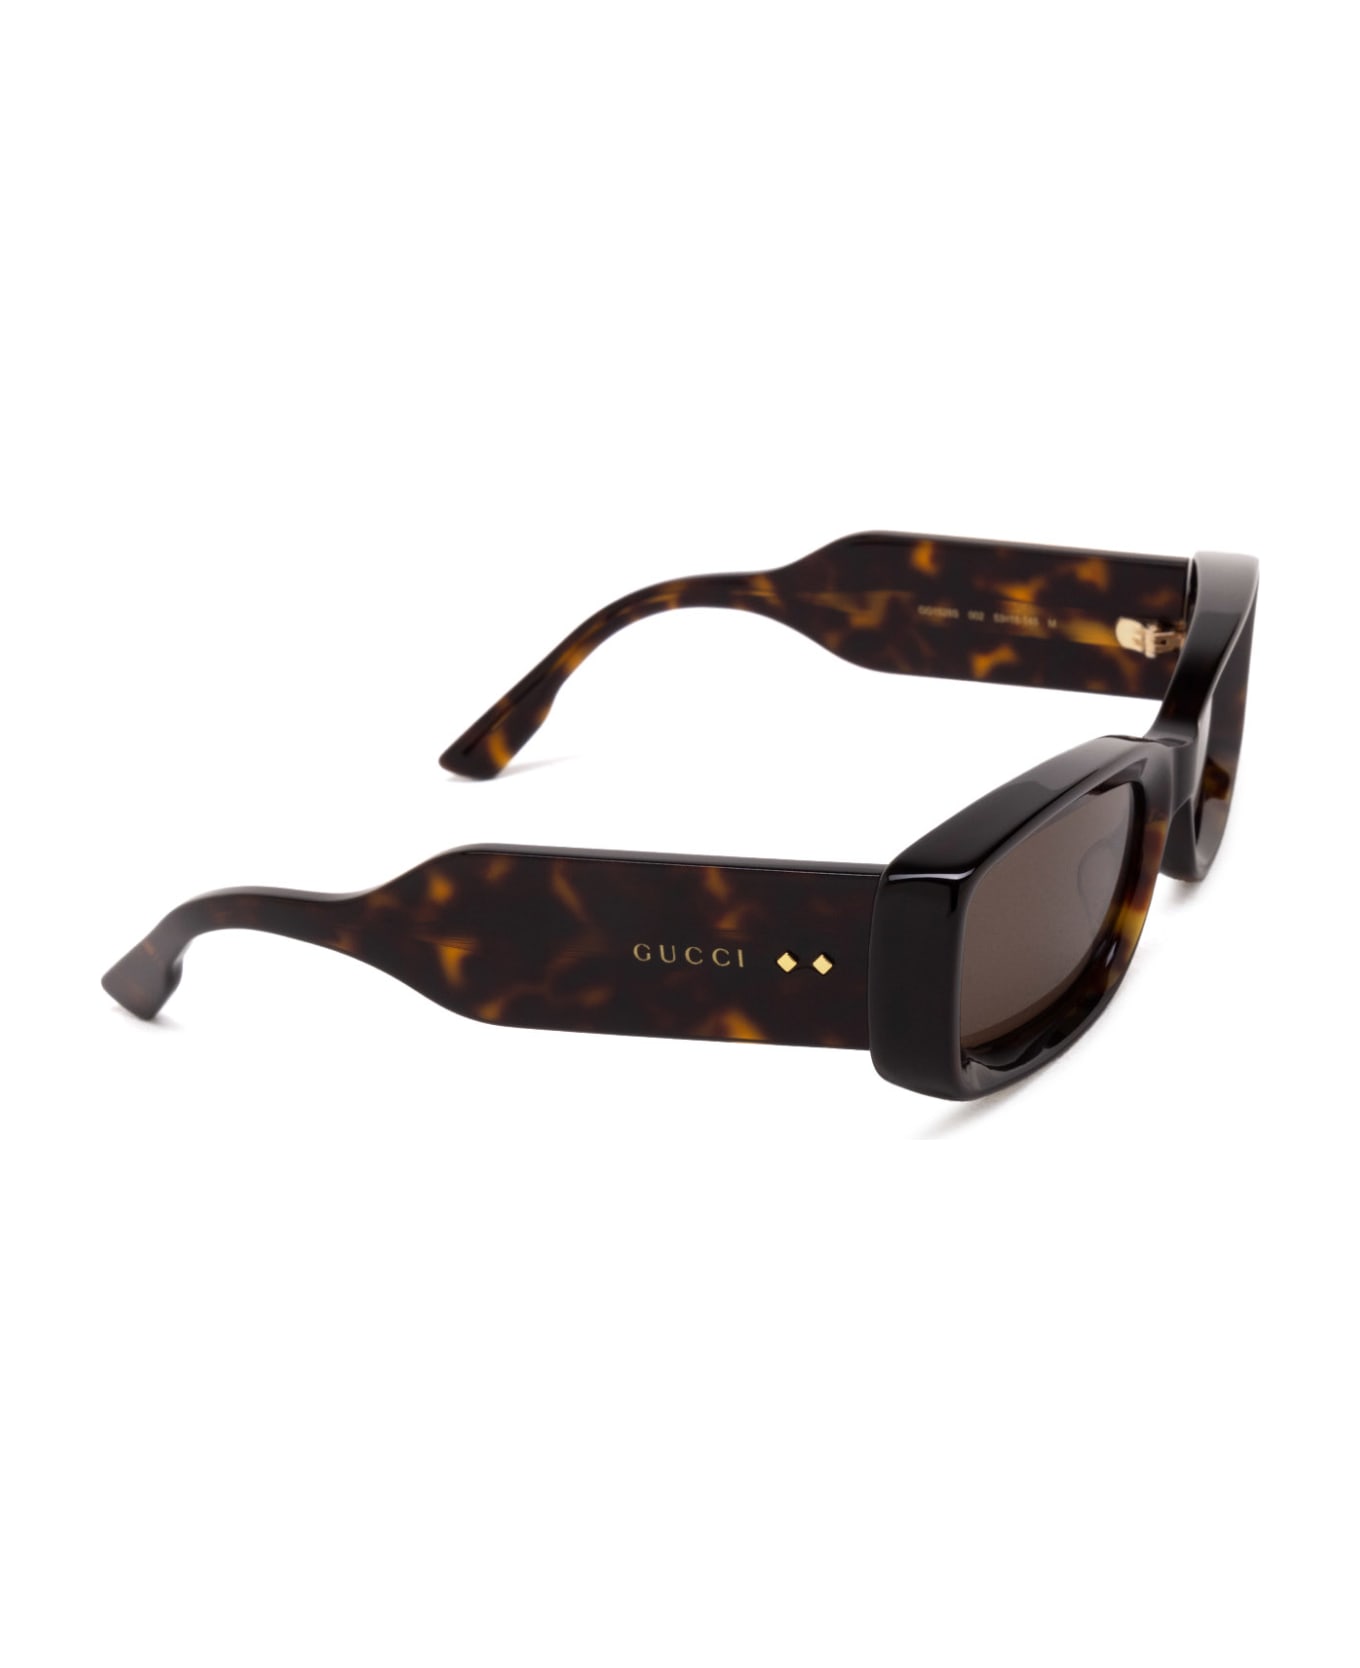 Gucci Eyewear Gg1528s Havana Sunglasses - Havana サングラス